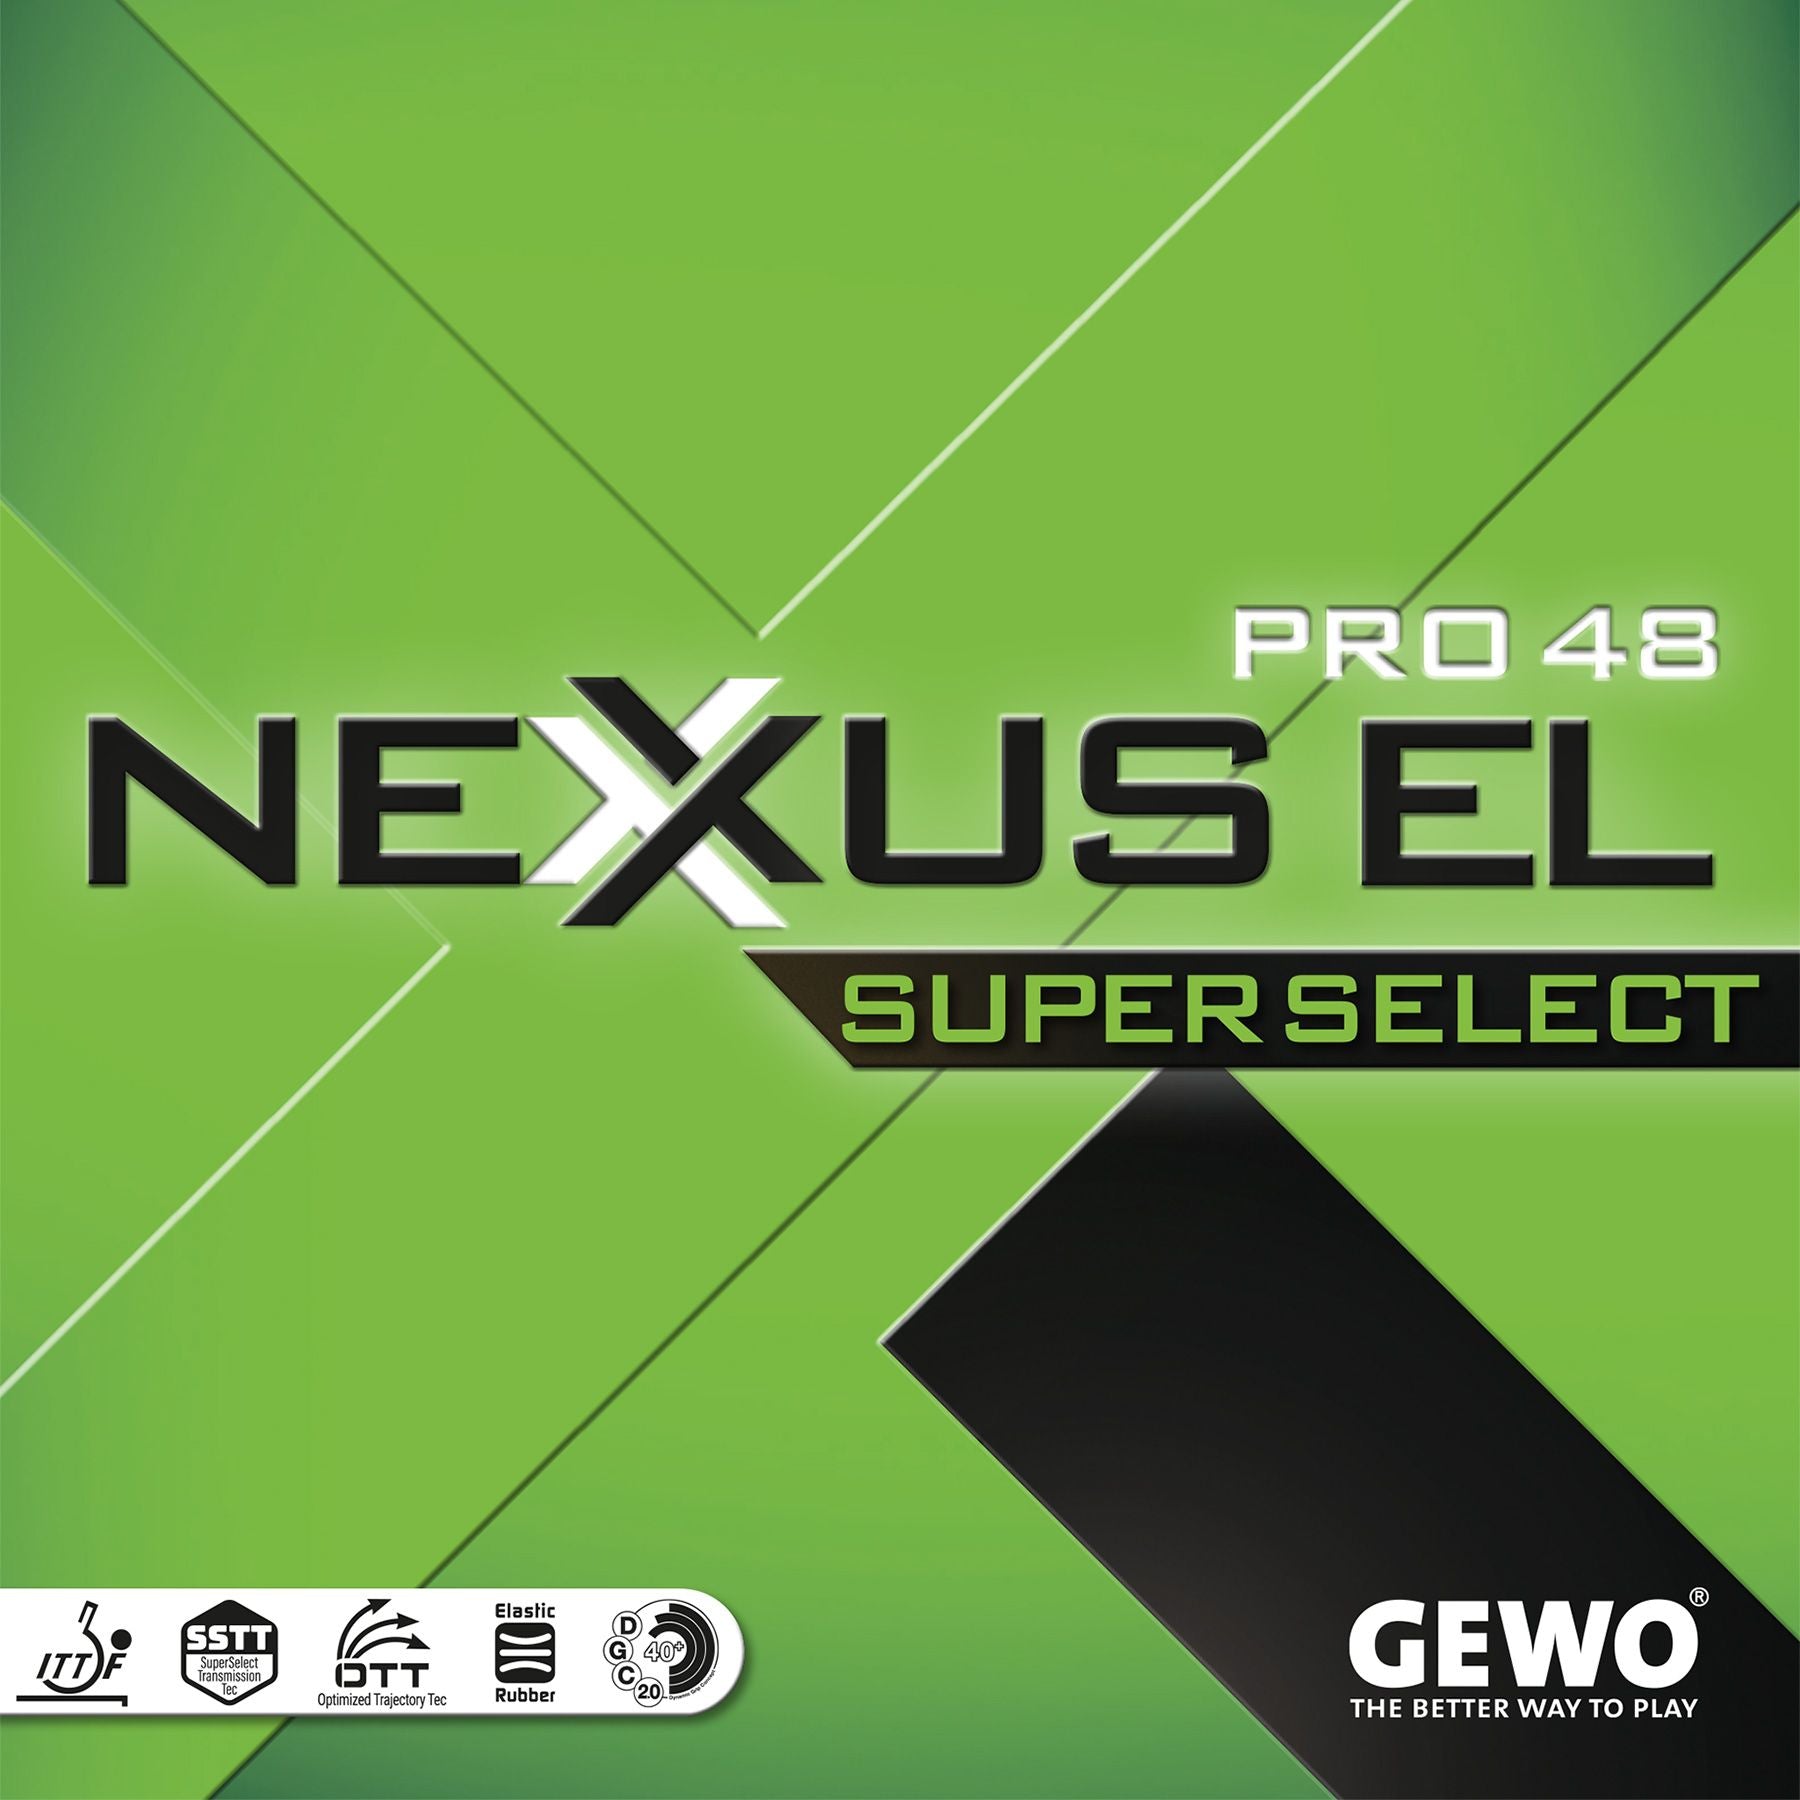 GEWO Nexxus EL Pro 48 SuperSelect - Table Tennis Rubber